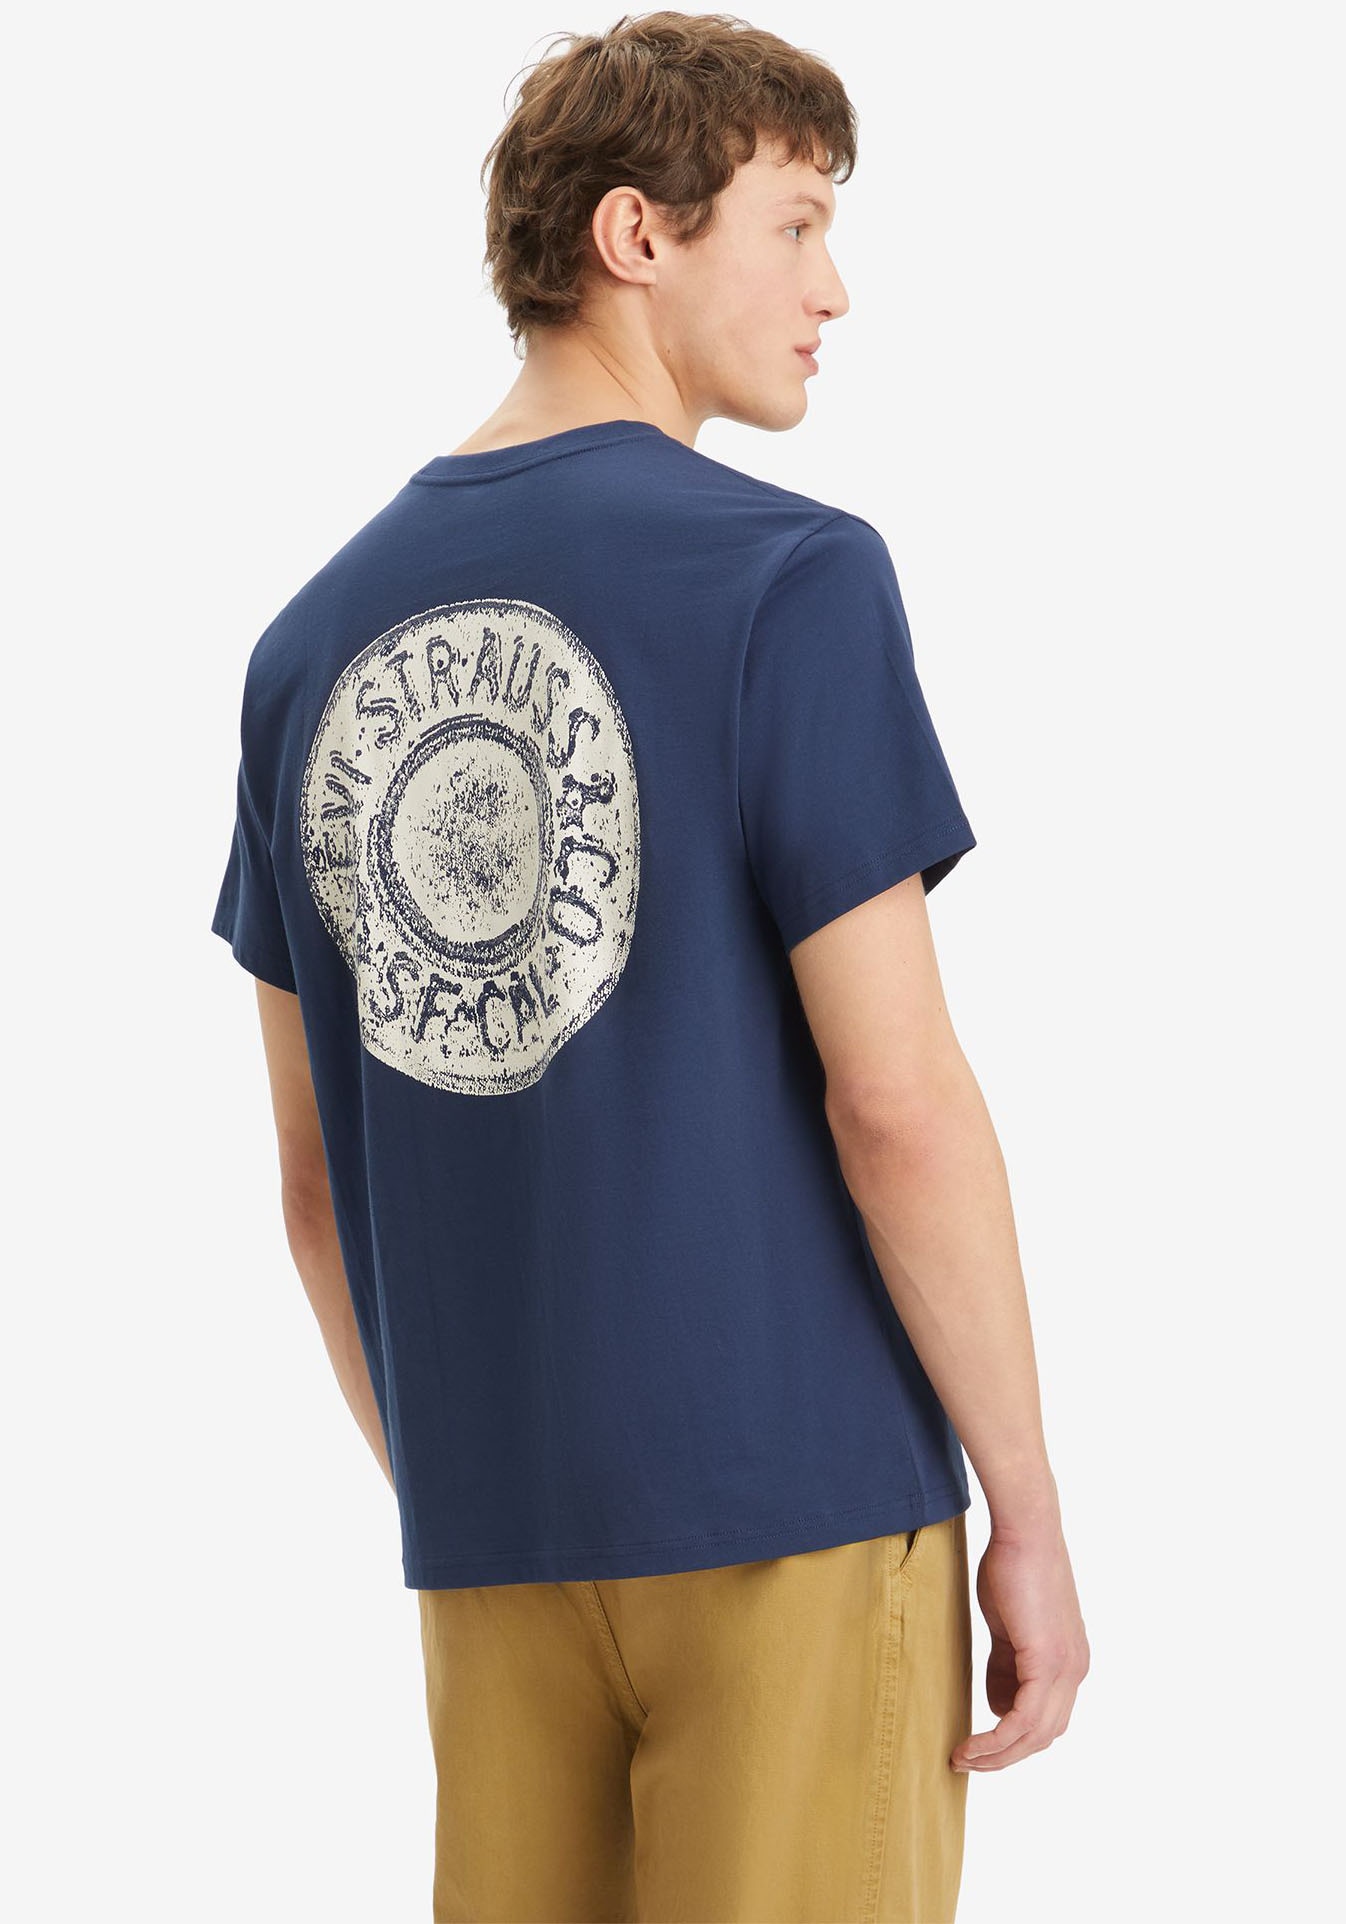 Levi's® T-Shirt »RELAXED FIT TEE«, mit großem Rückenprint